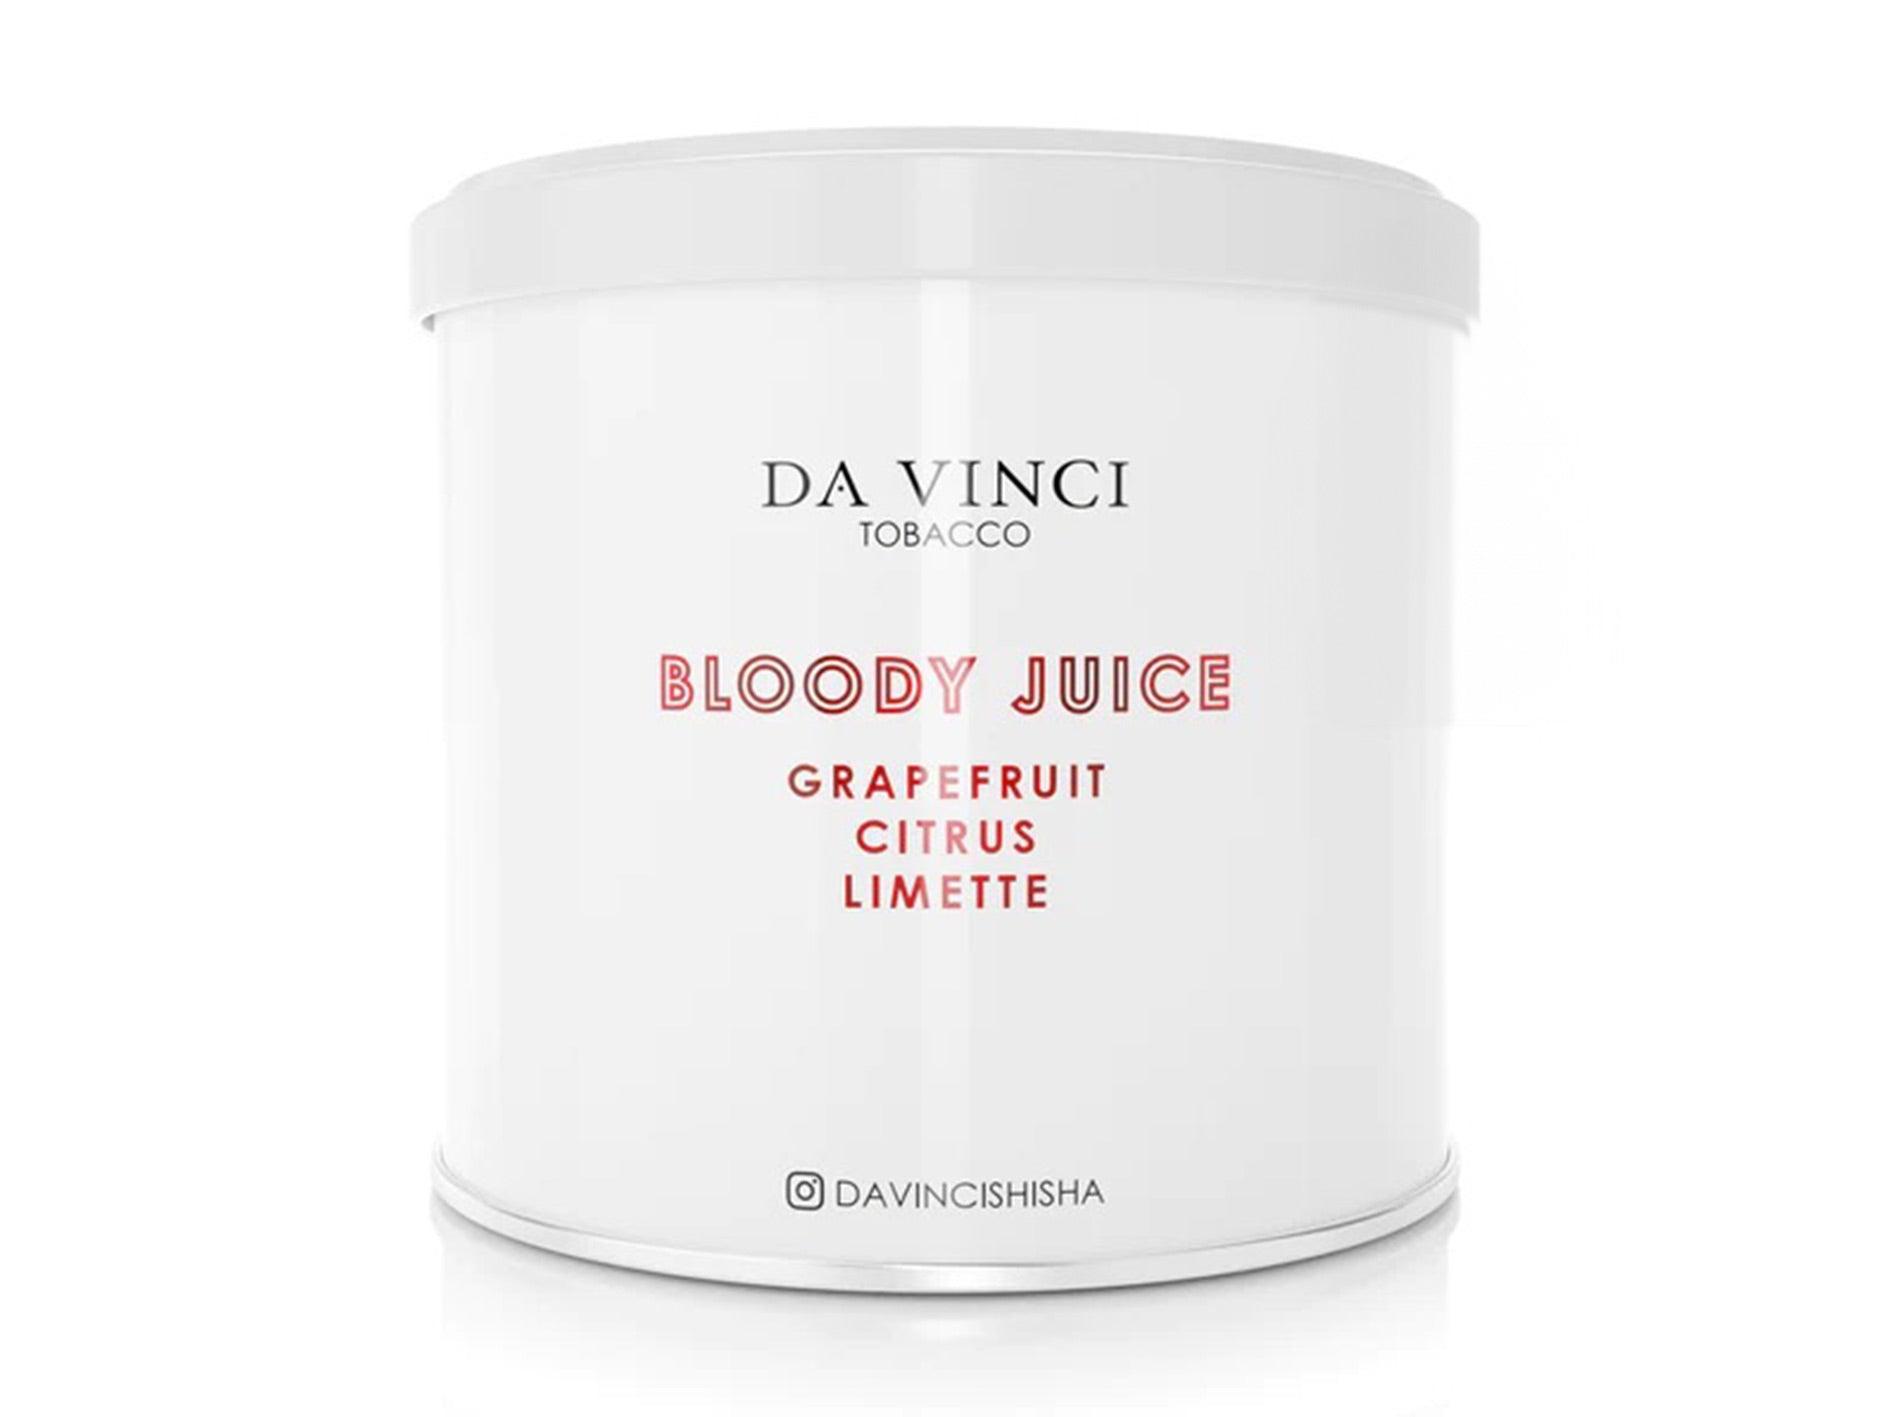 Da Vinci Pfeifentabak 70g Bloody Juice Grapefruit Citrus und Limette in Rot